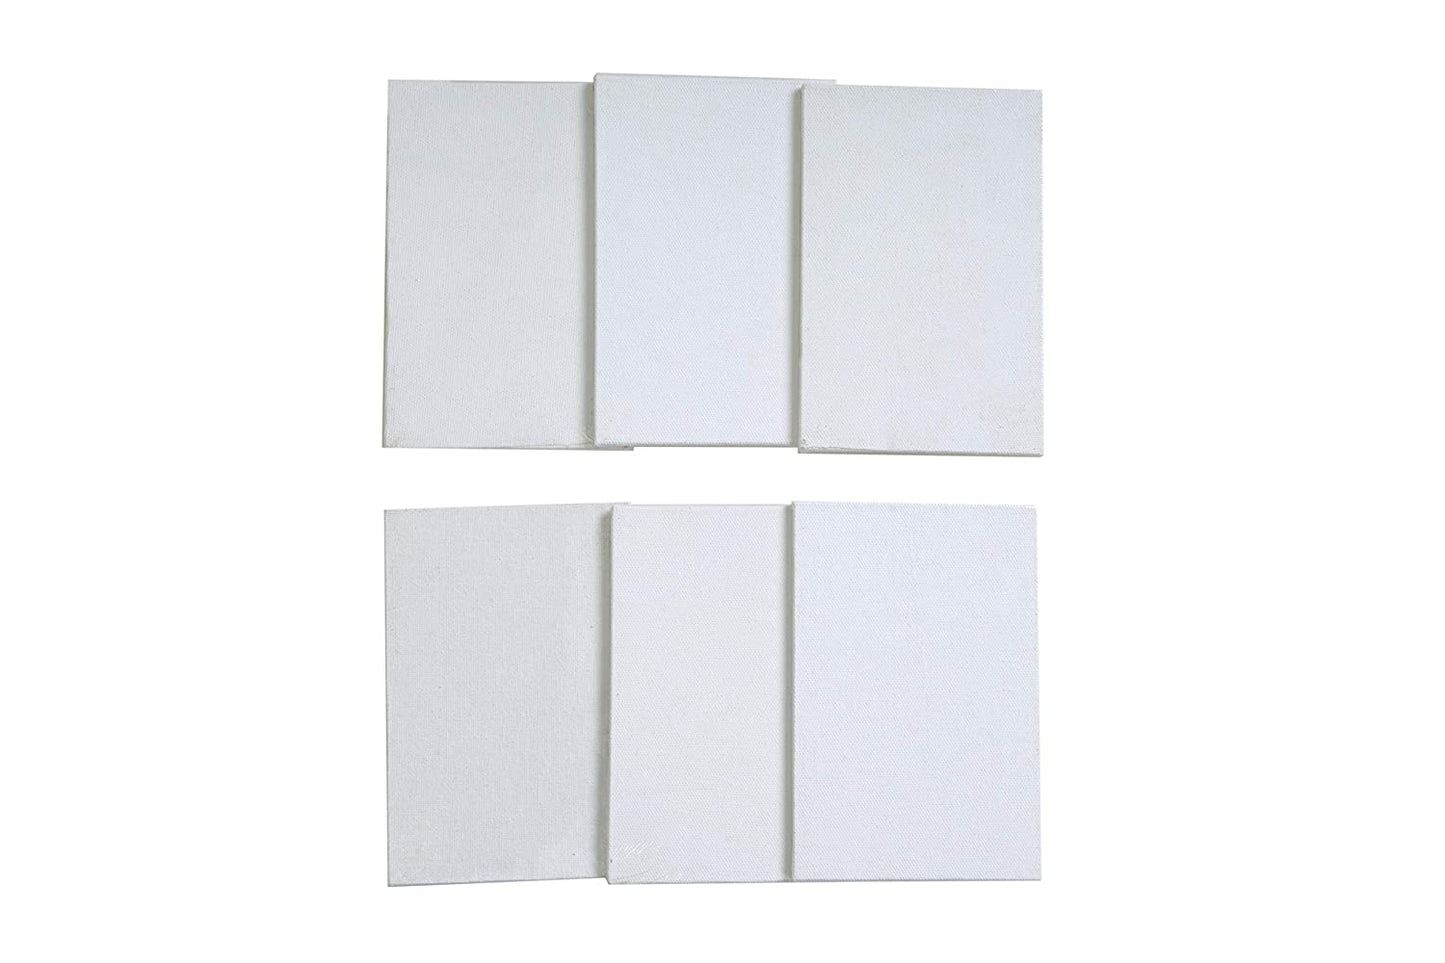 Brustro 100% Cotton Canvas Board Medium Grain 12X12 (Pack of 4